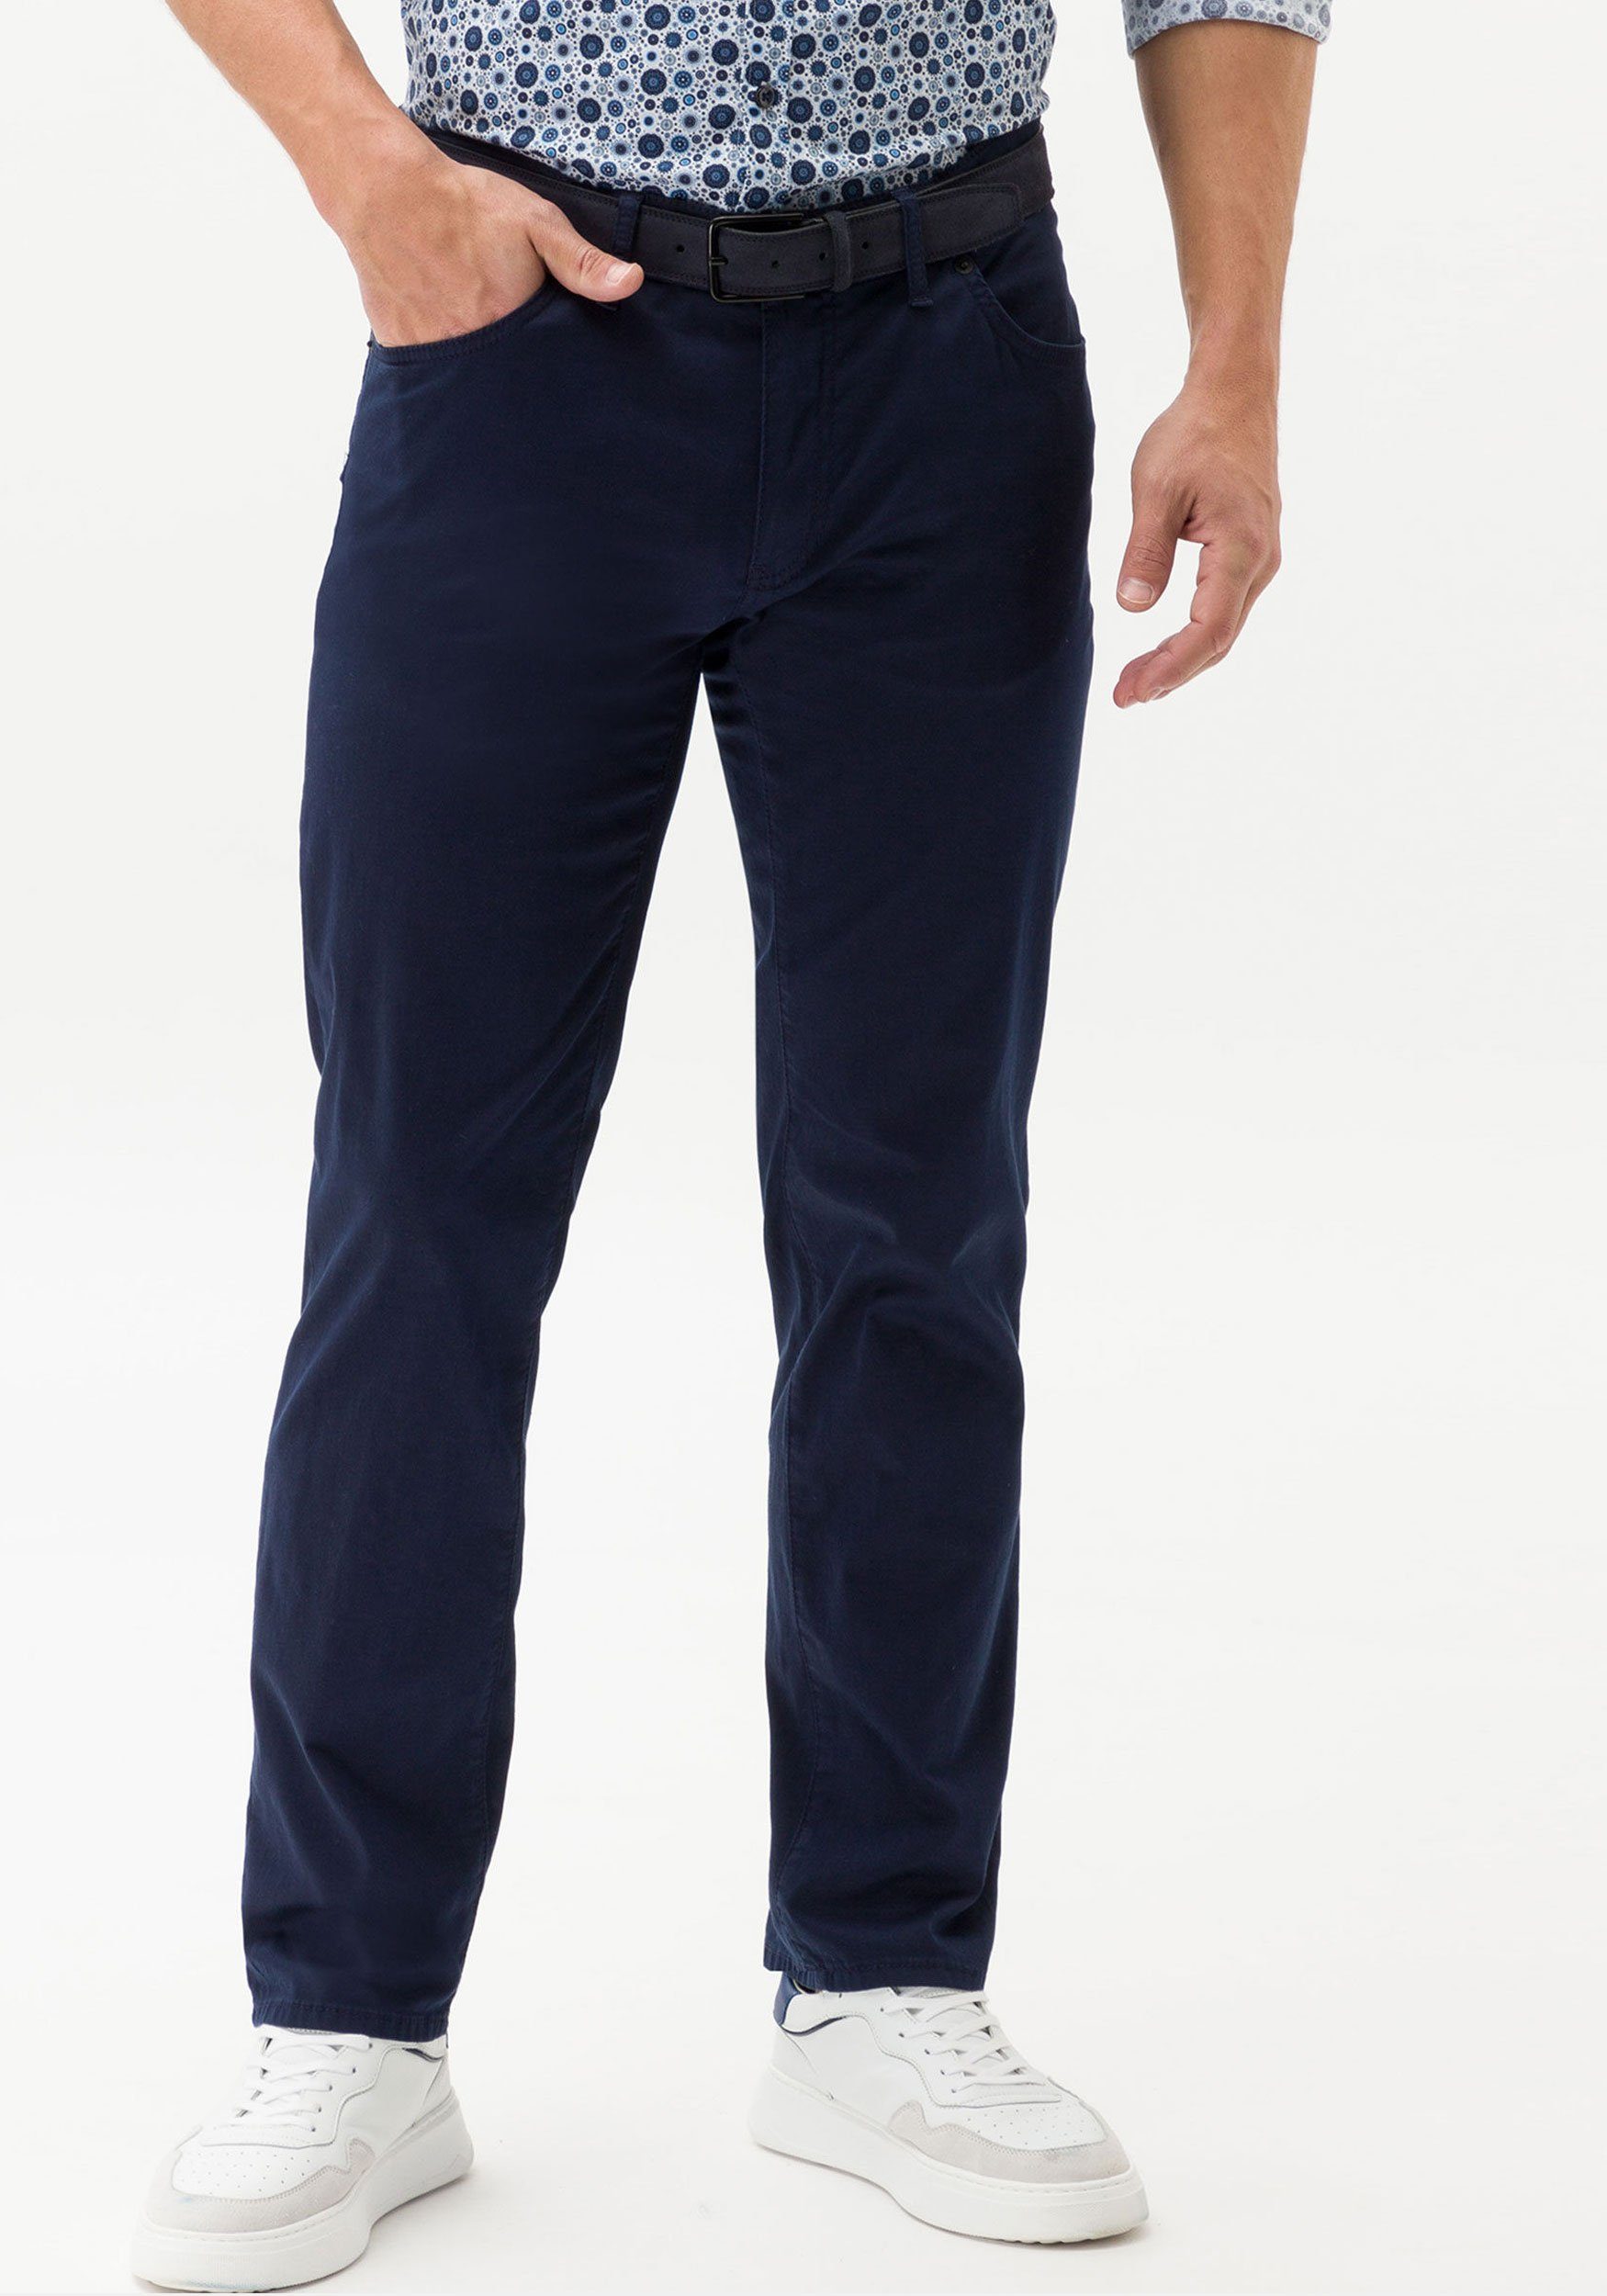 Baumwoll-Stretch, Ultralight Cadiz Flachgewebe superleicht Brax sea 5-Pocket-Jeans